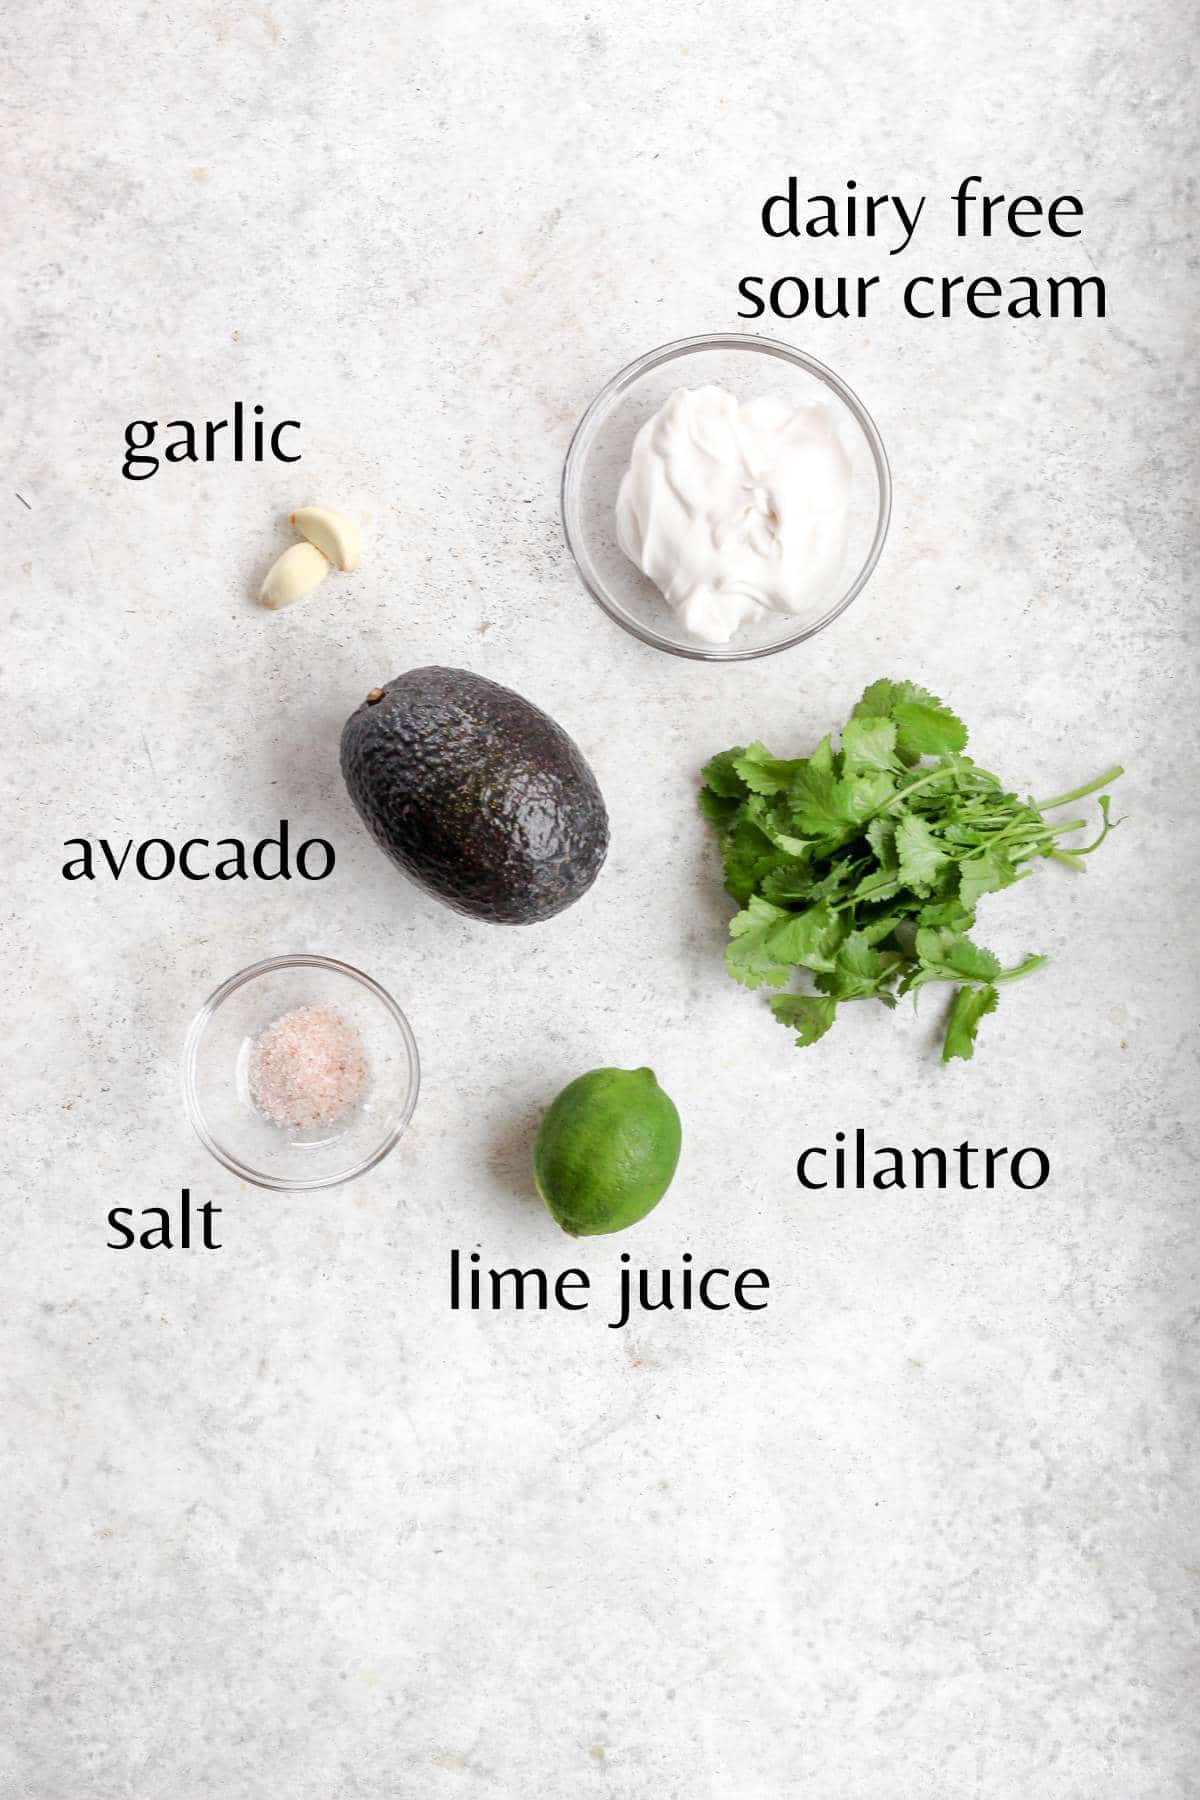 All the ingredients you need to make vegan avocado crema.